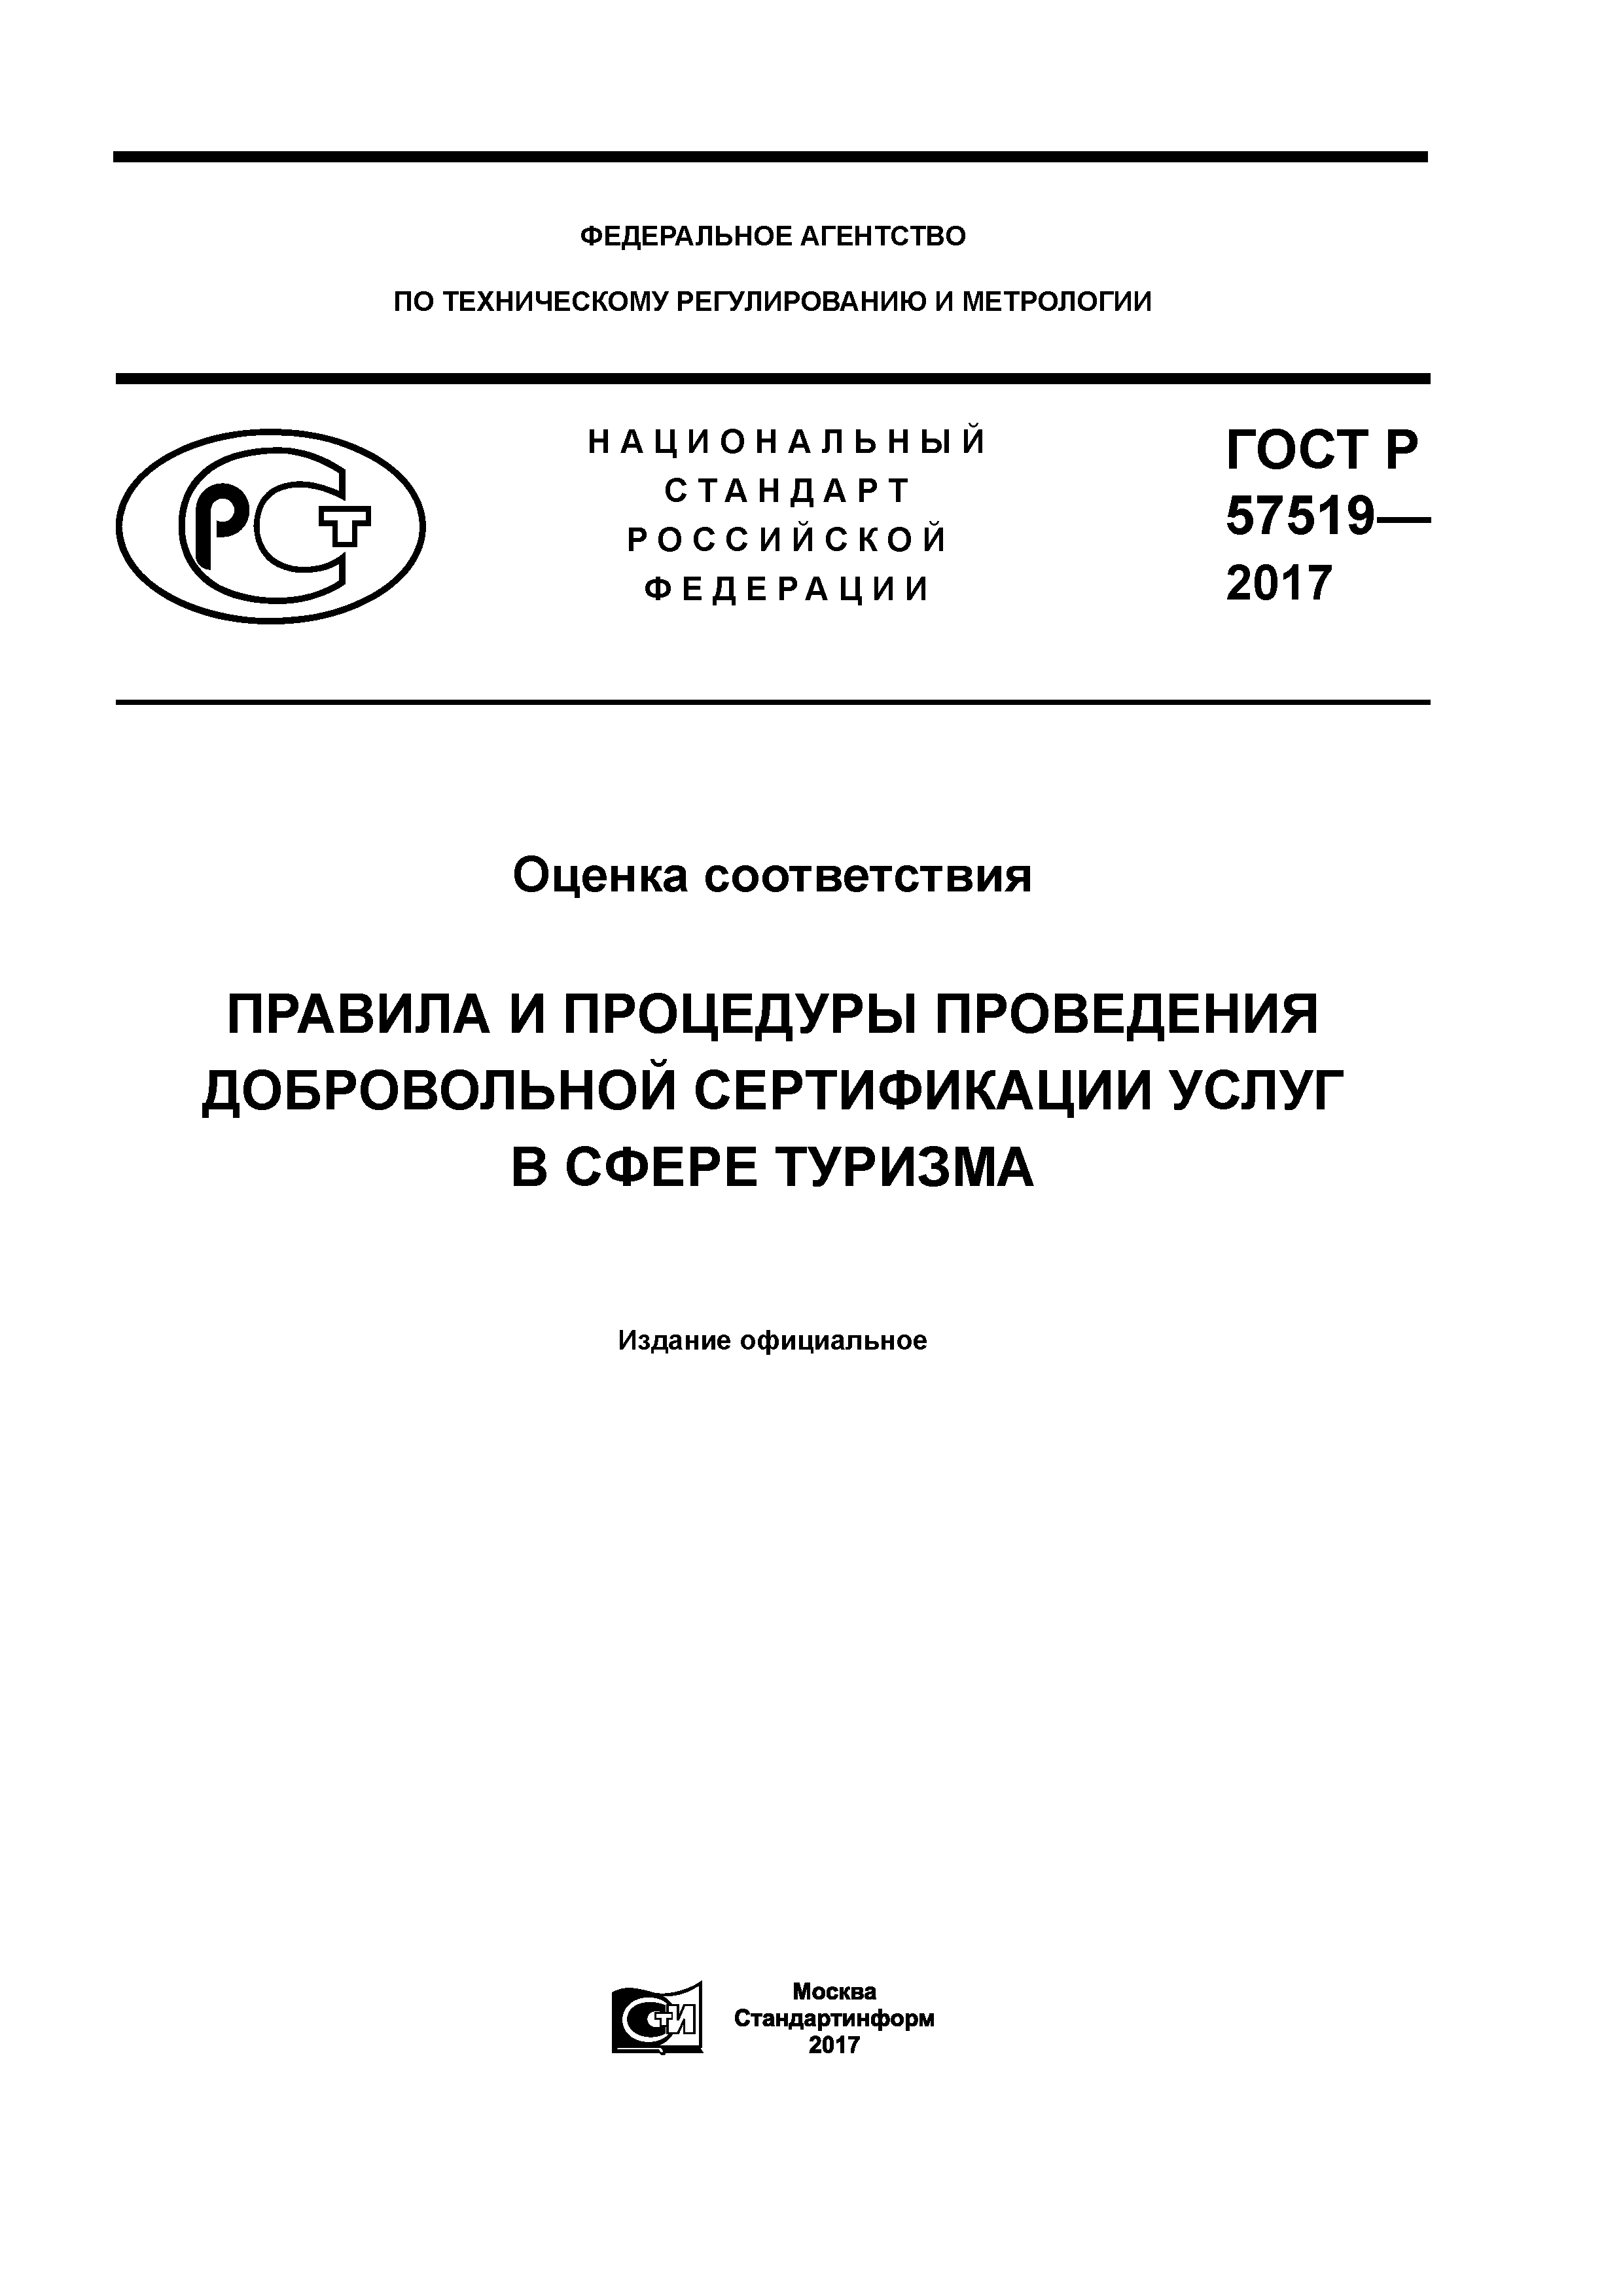 ГОСТ Р 57519-2017